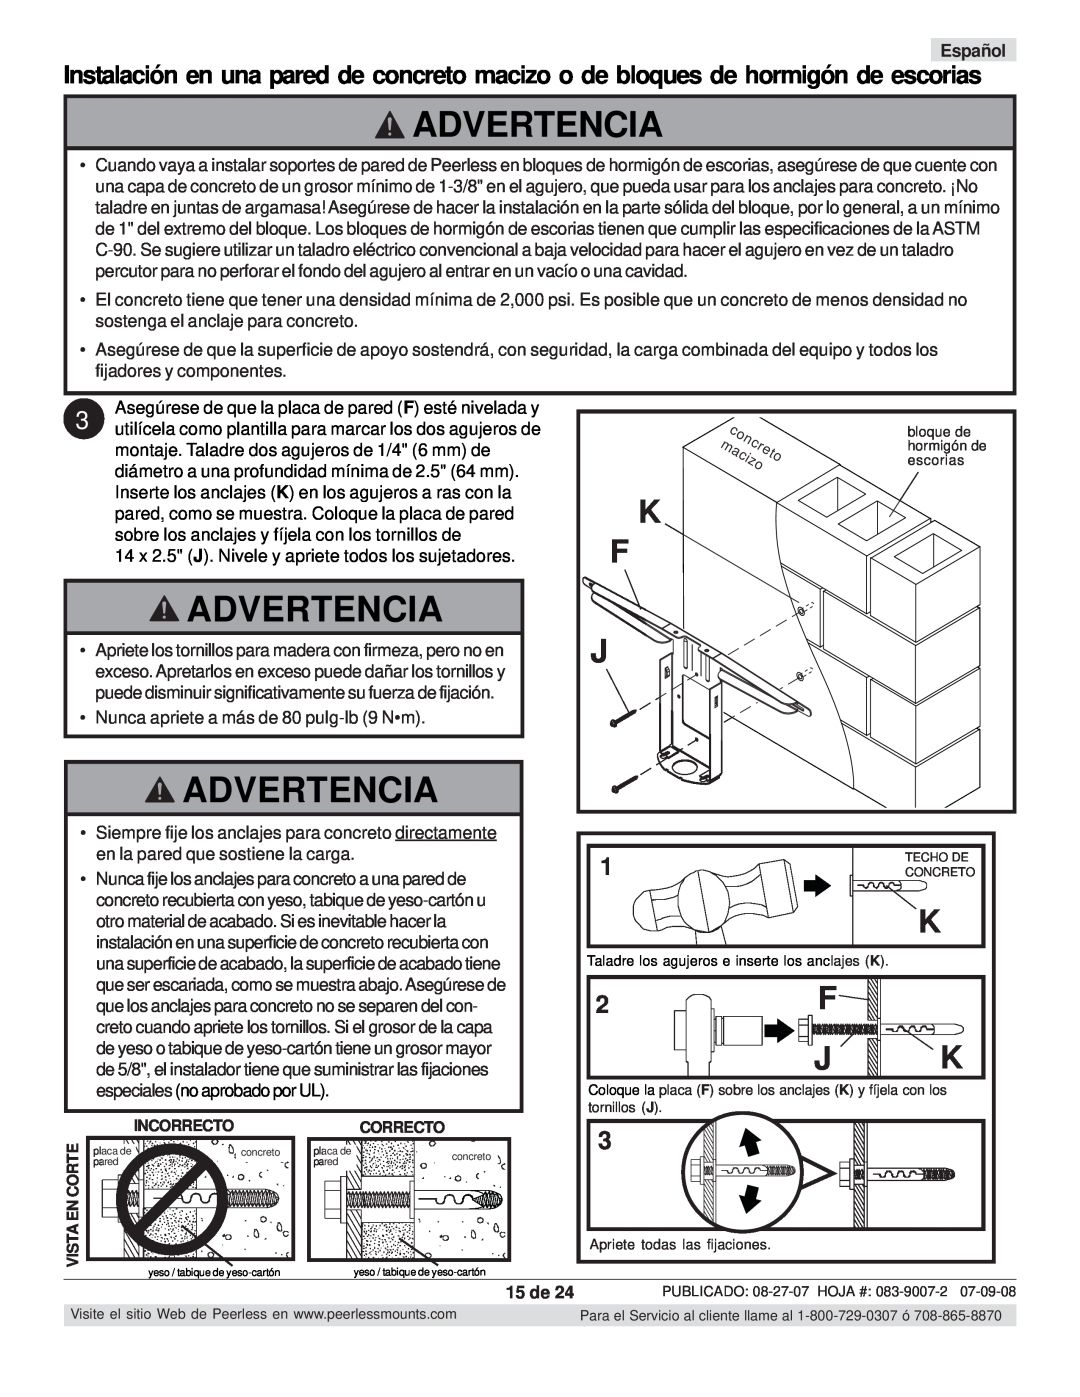 Peerless Industries SCS221 manual 15 de, Advertencia, concreto, macizo, Español 